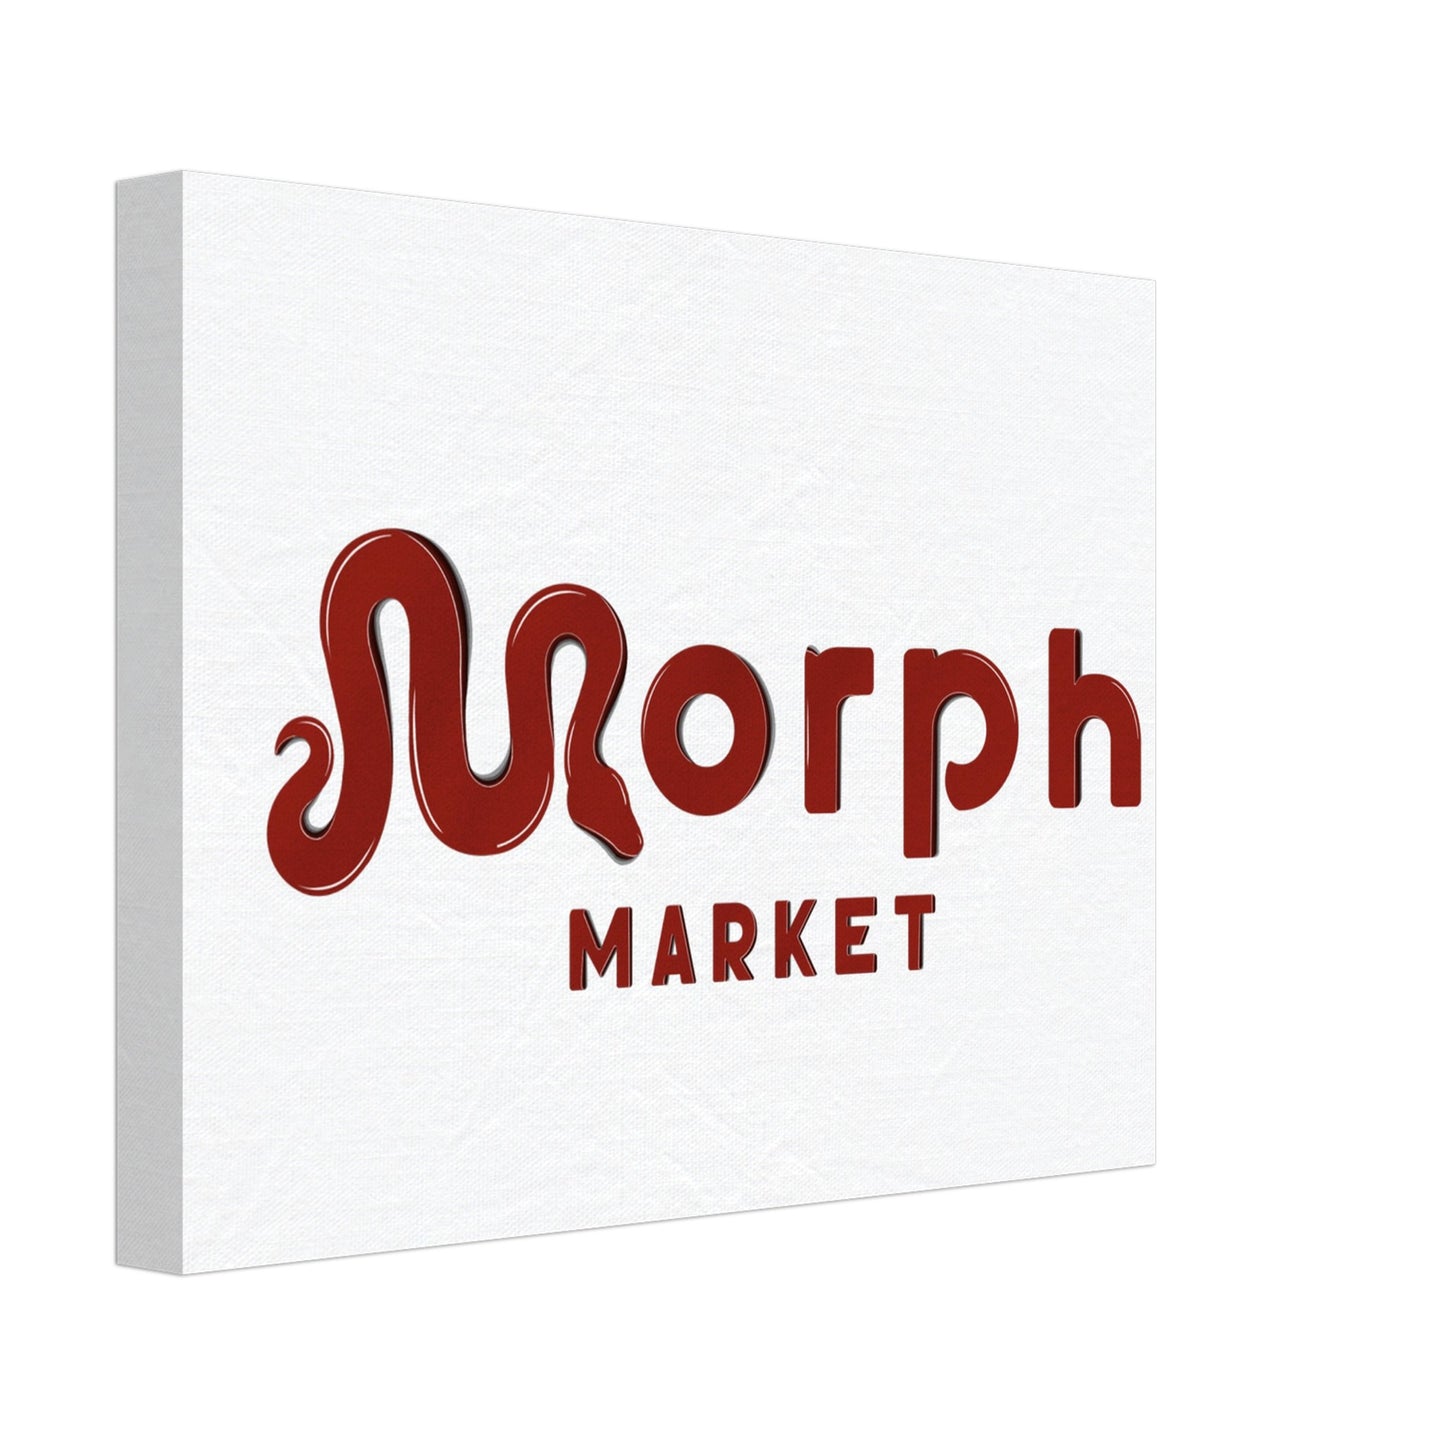 Morph Market (Red) - Canvas